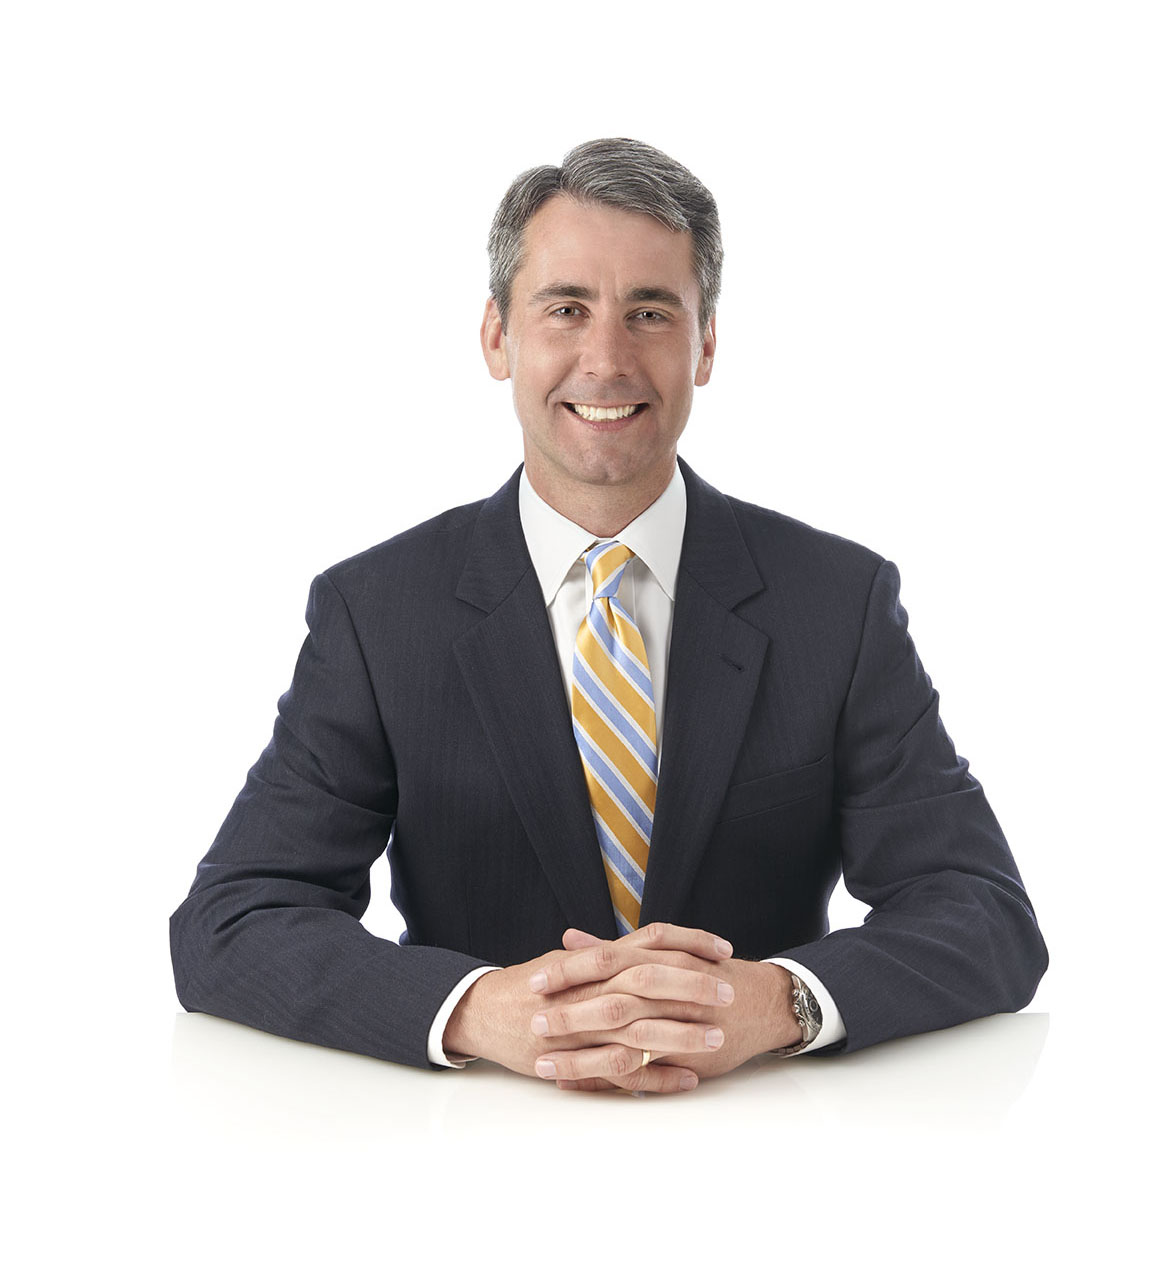 Denis M. Horrigan, CFP is Partner of Connecticut Wealth Management